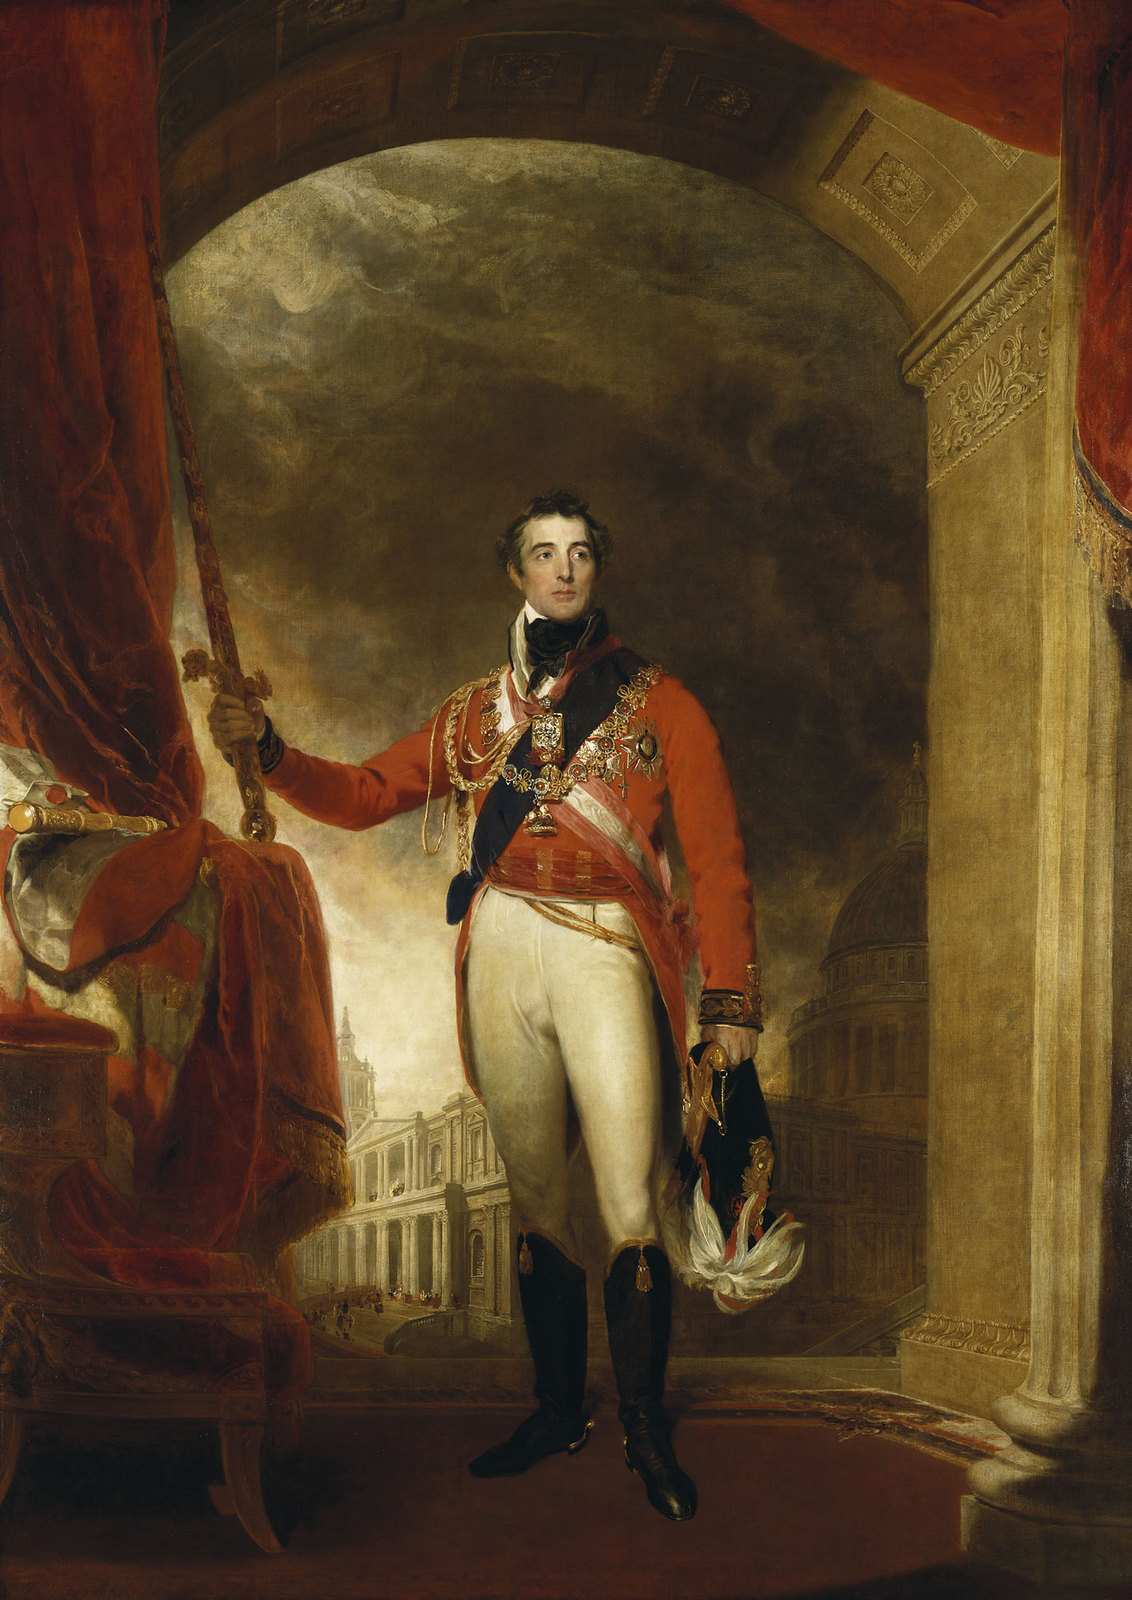 Portrait of Arthur Wellesley, 1st Duke of Wellington by Thomas Lawrence, 1815